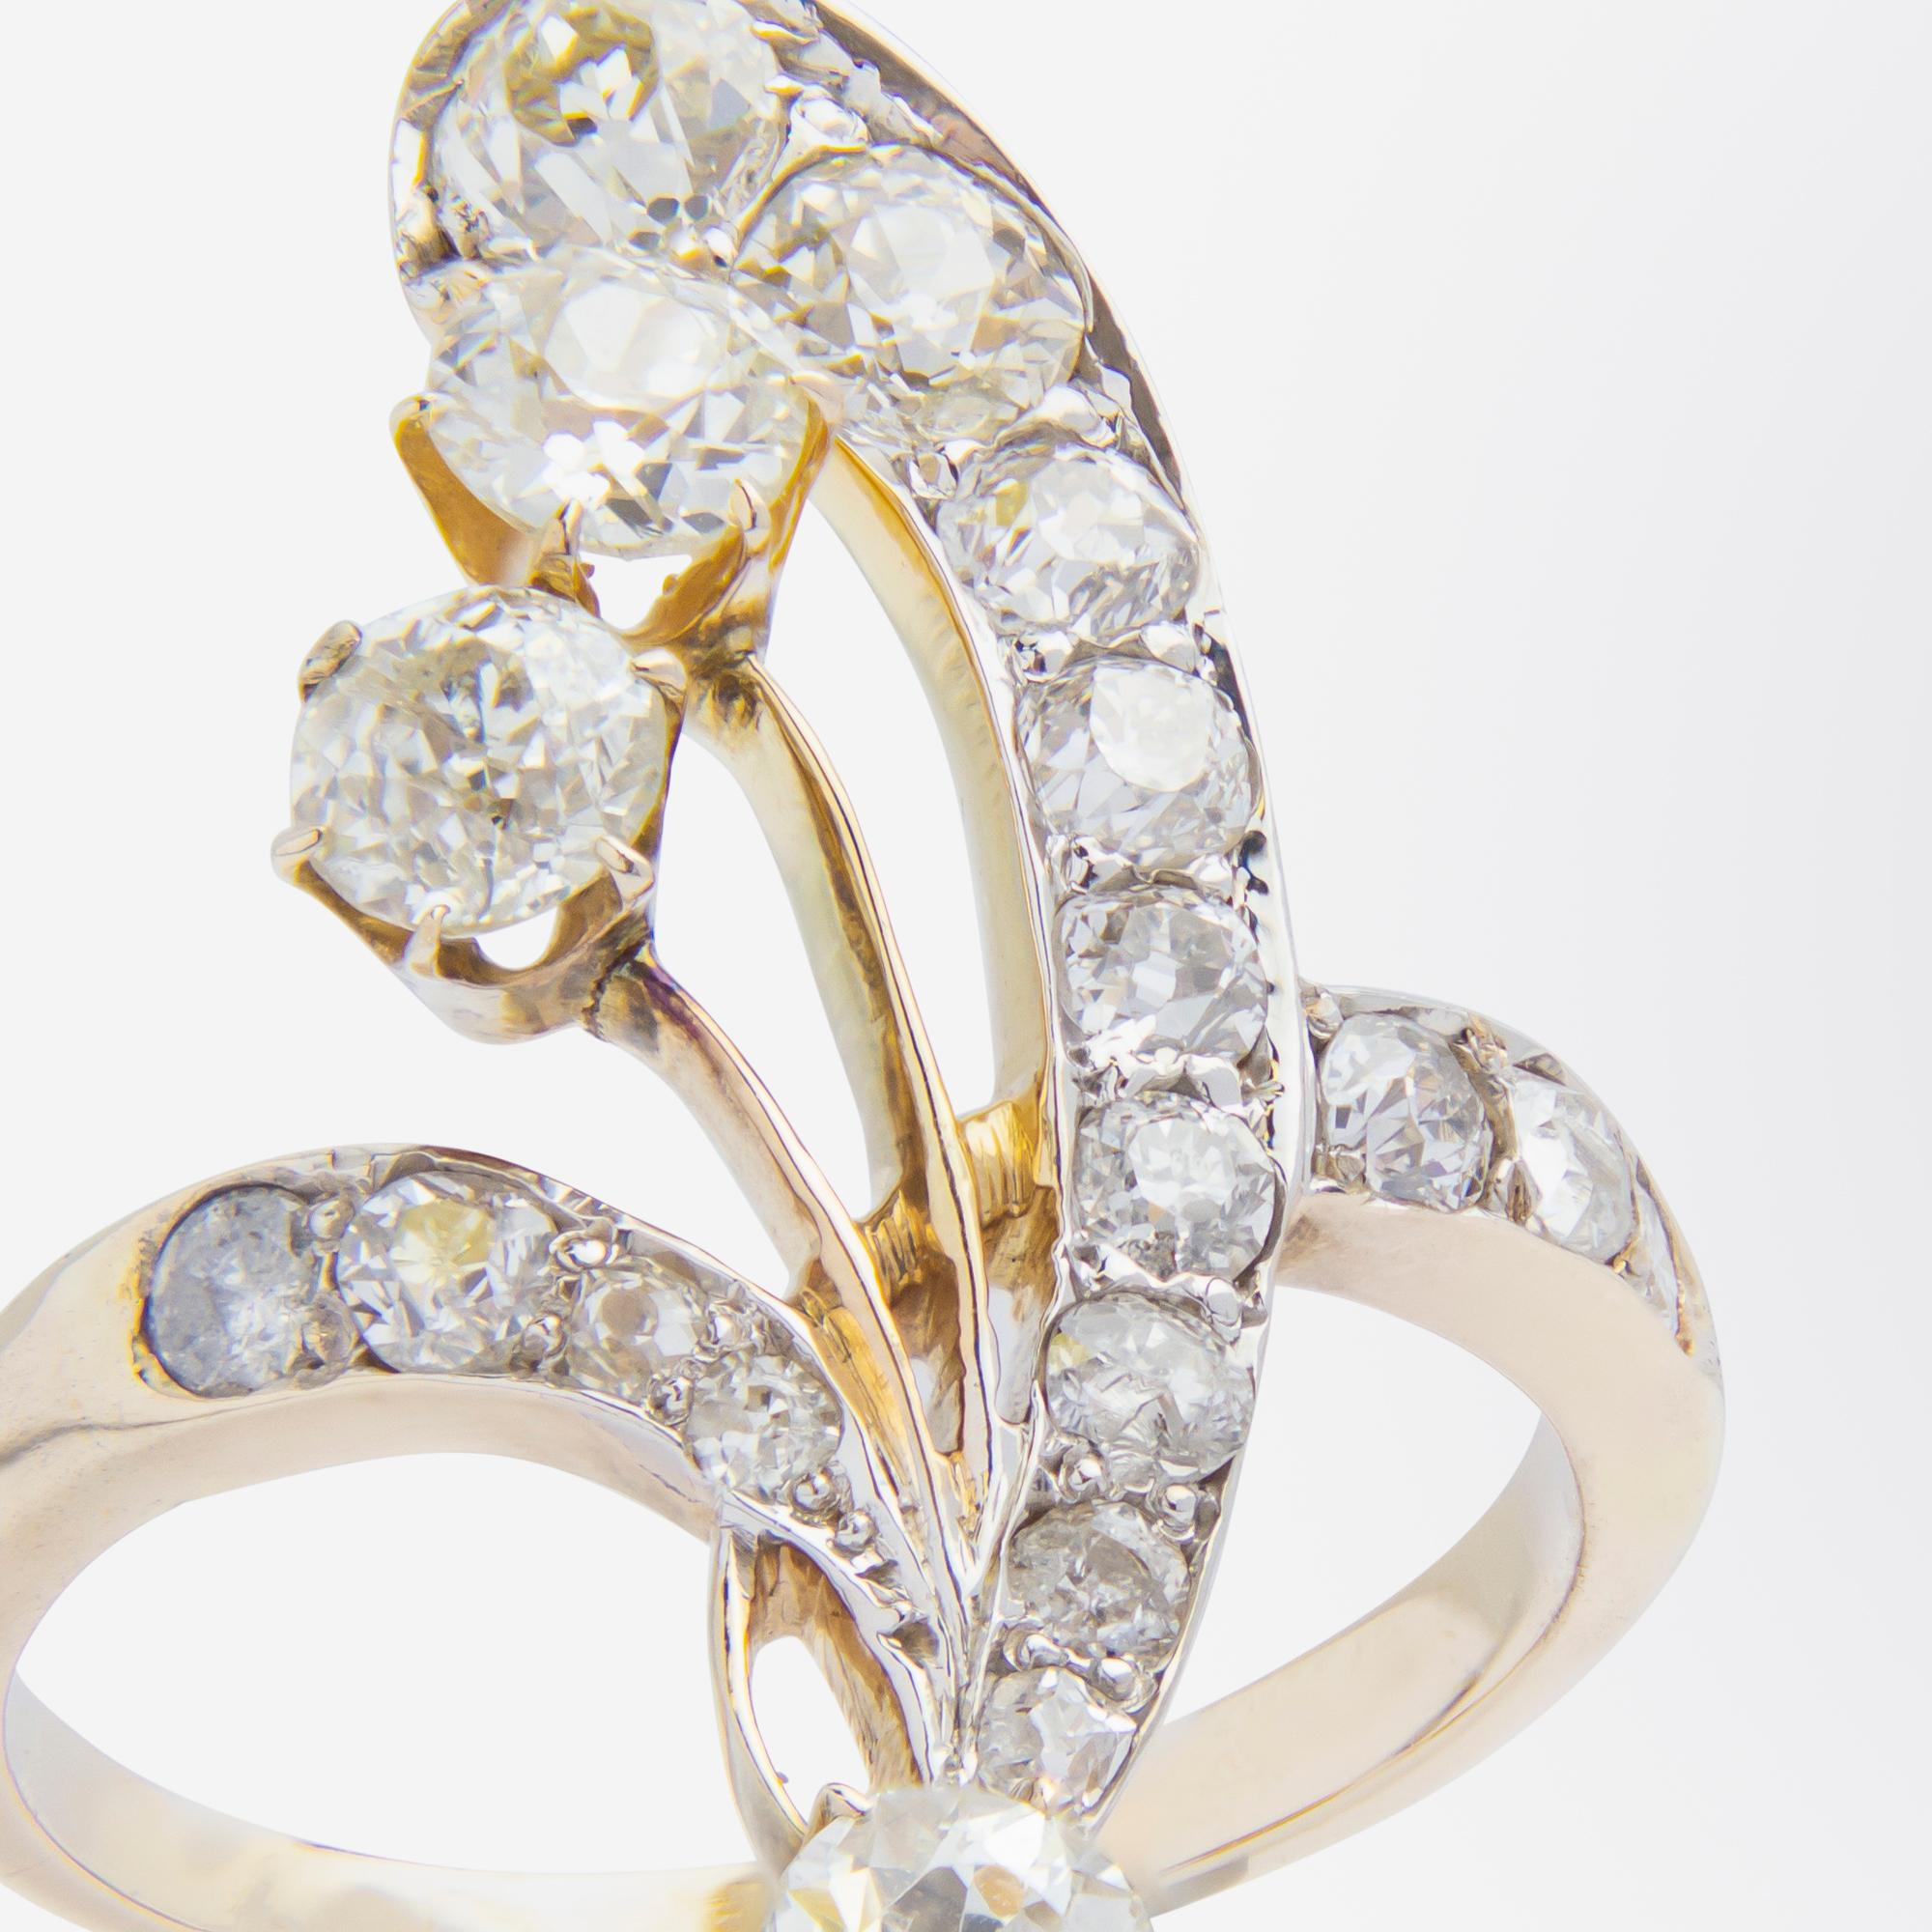 Old European Cut Art Deco Diamond 'Plume' Ring in 18 Karat Gold